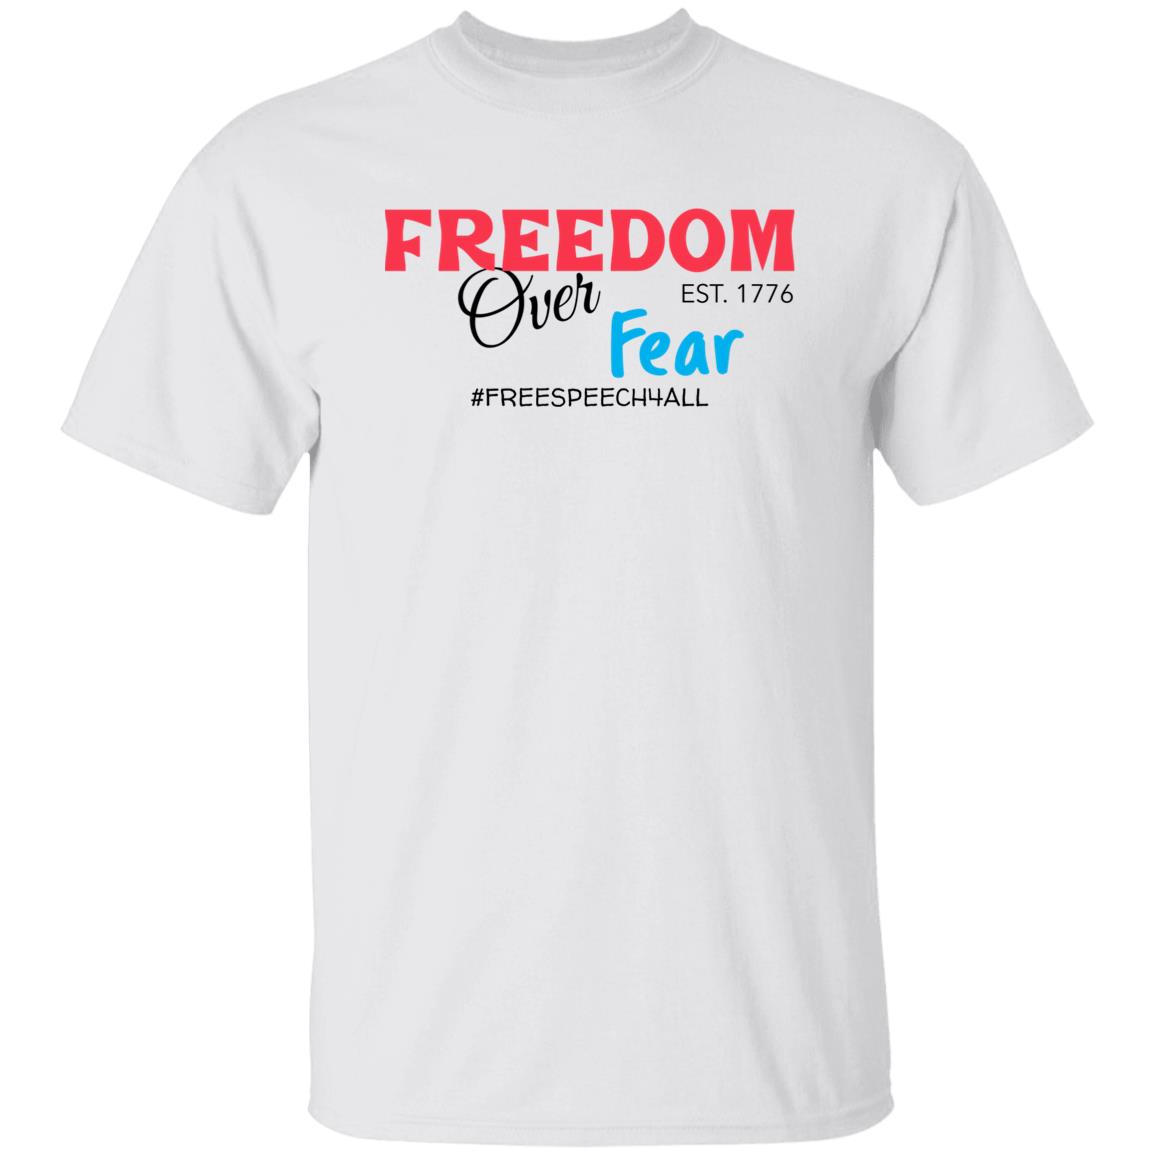 Freedom Over Fear 5.3 oz. T-Shirt